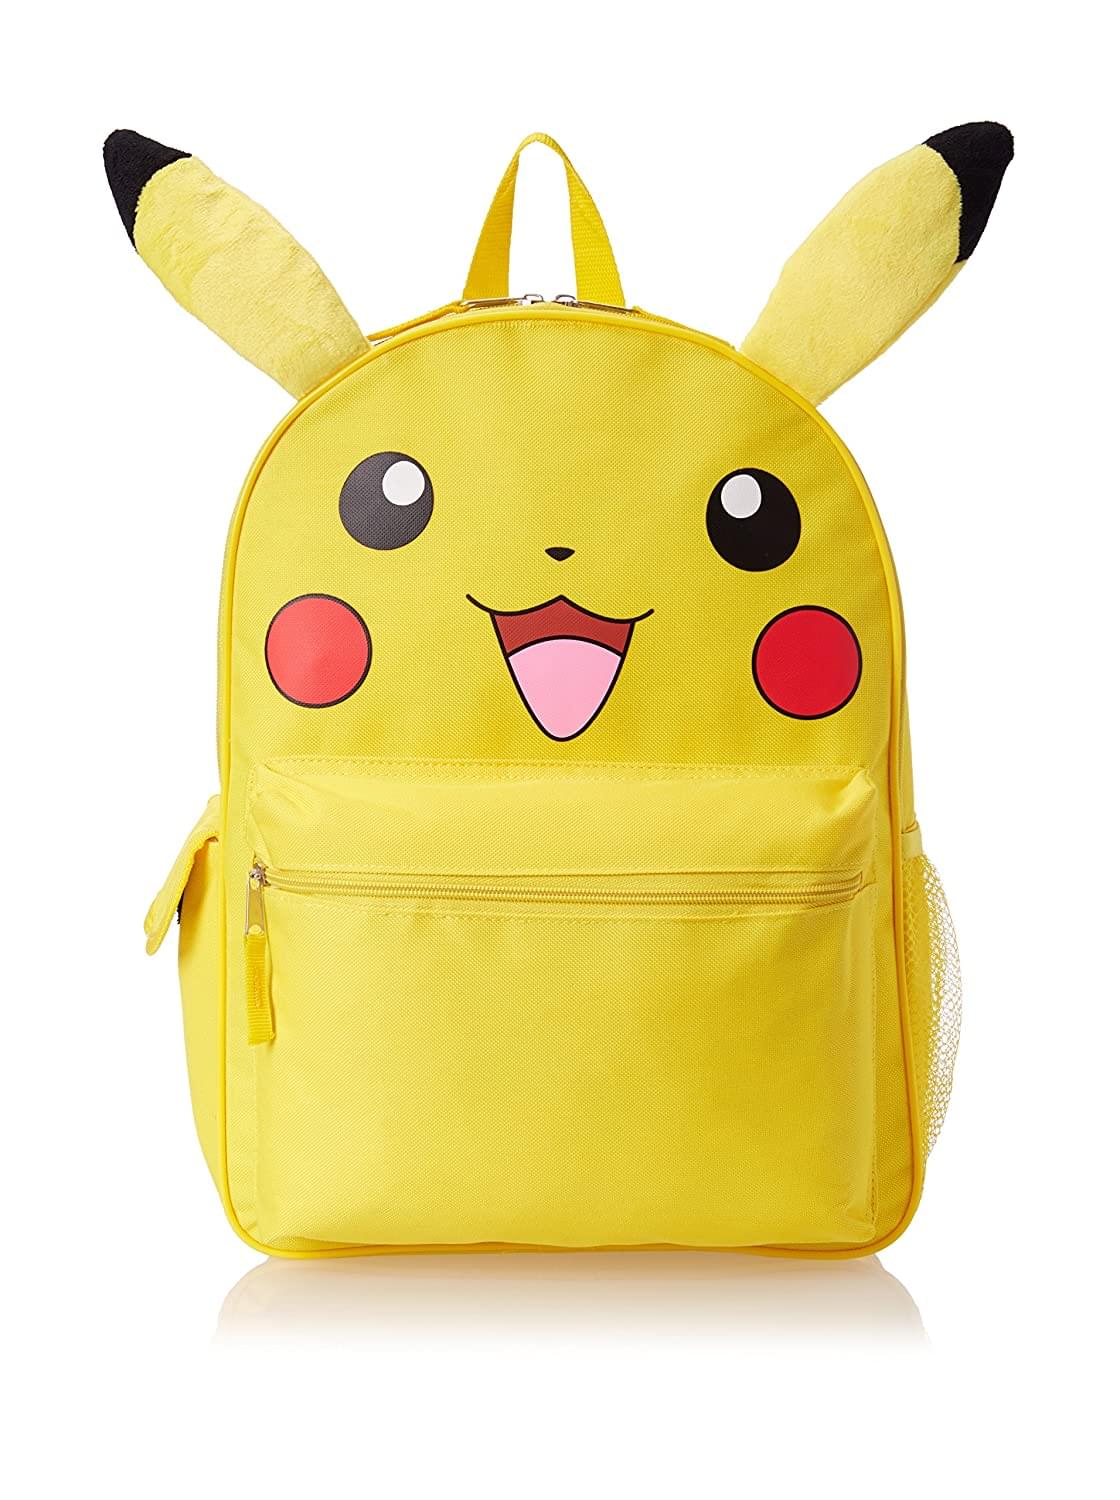 Pokemon Pikachu 3D 16 Inch Backpack